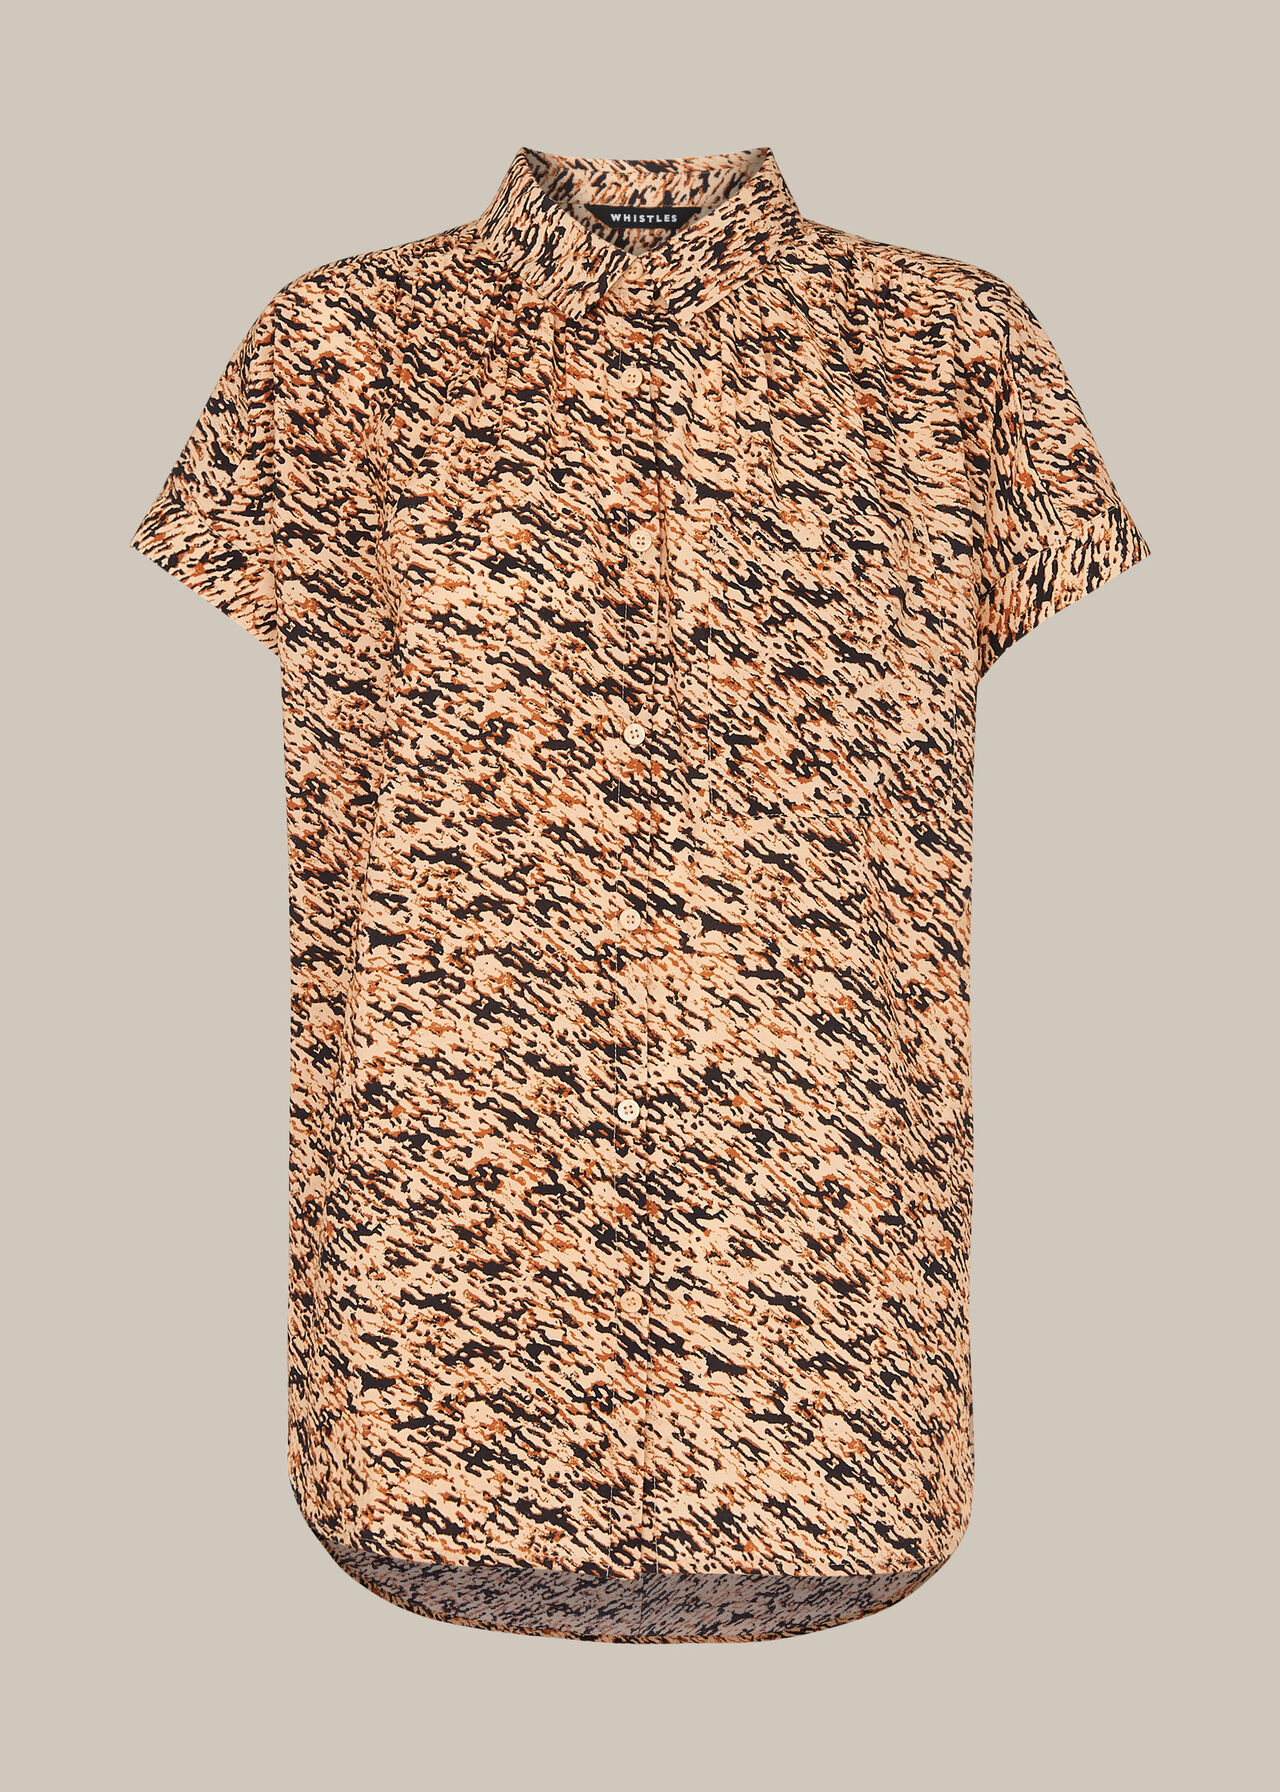 Bark Print Nicola Shirt